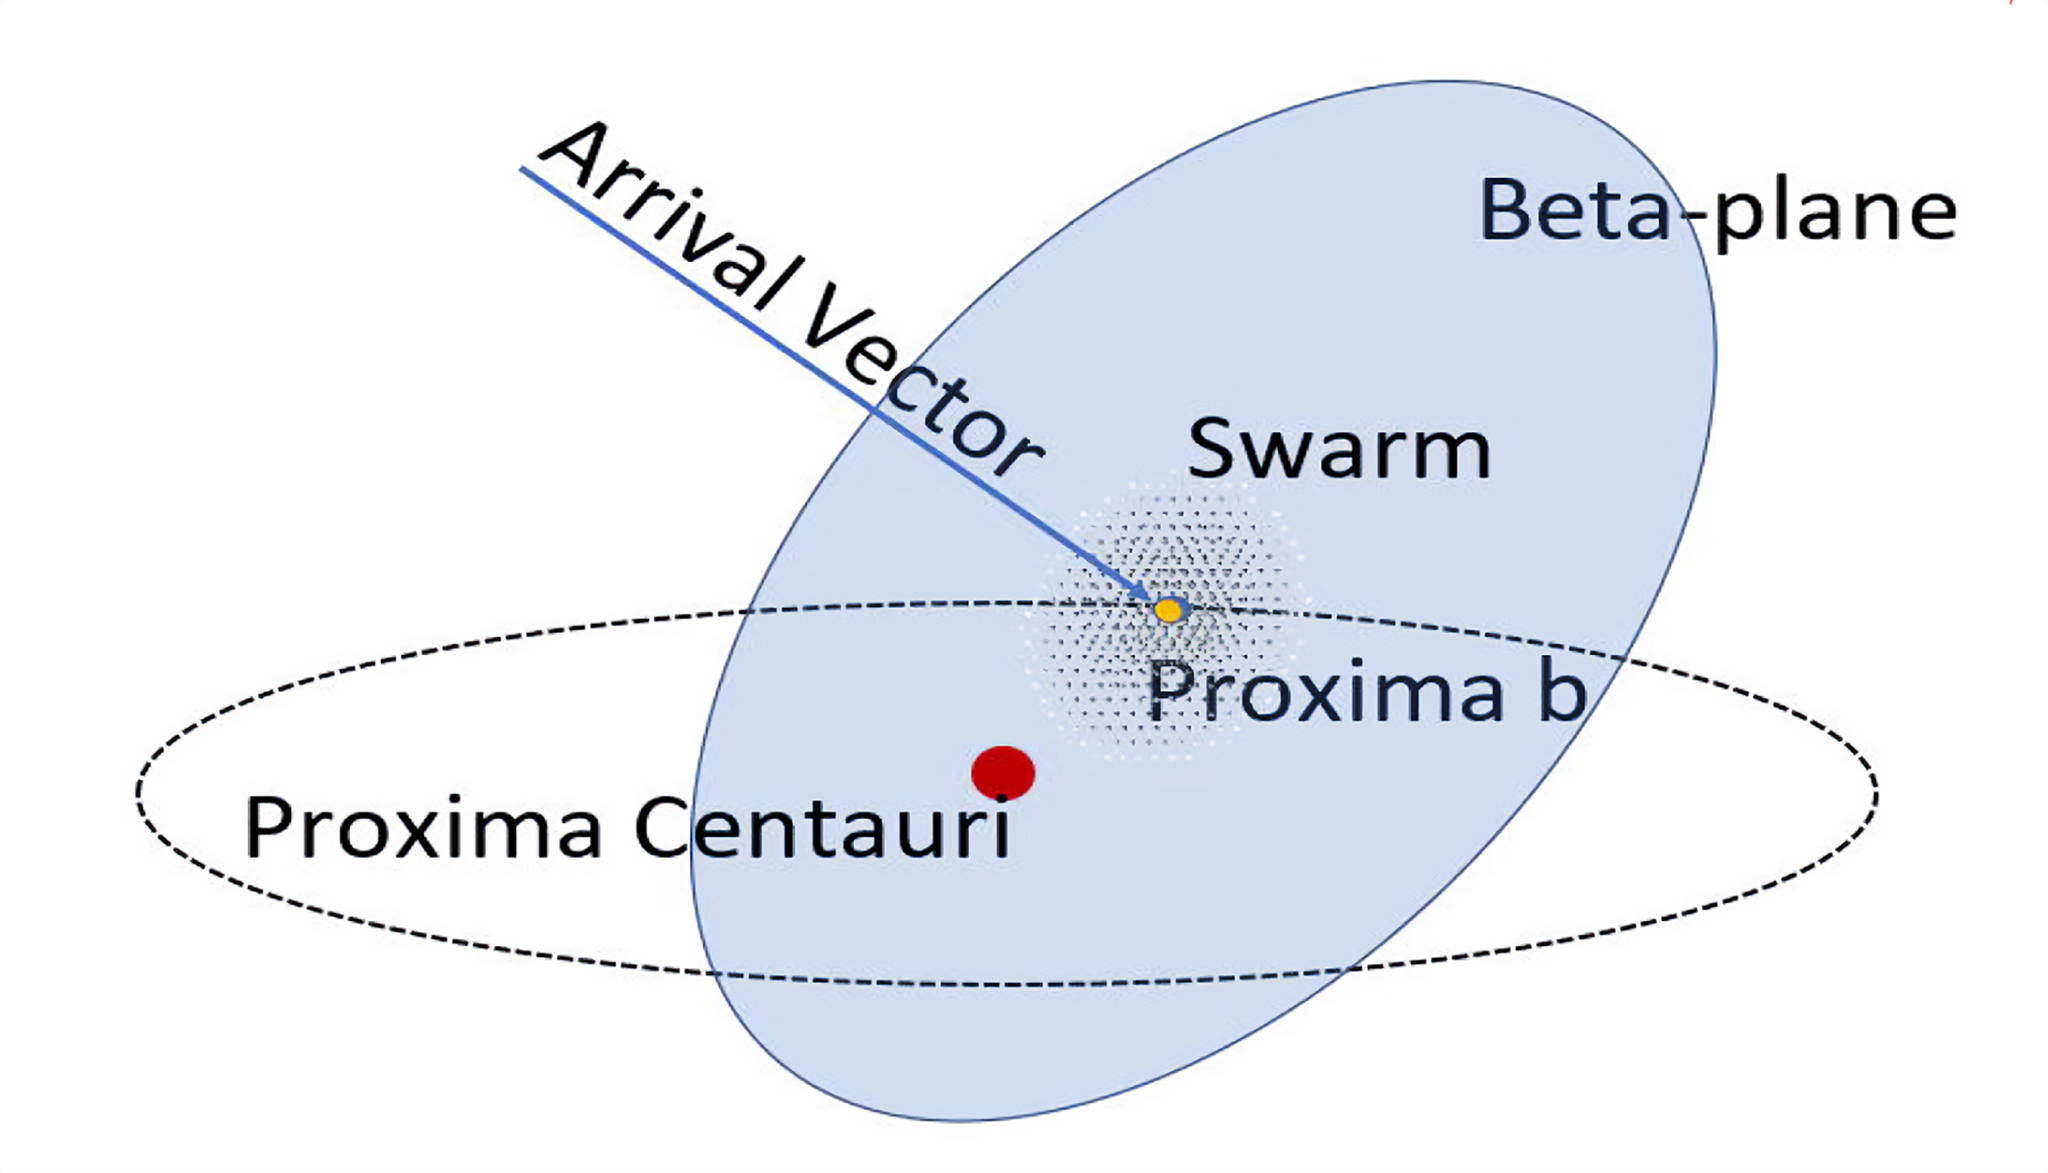 Labeled diagram of the Swarming Proxima Centauri